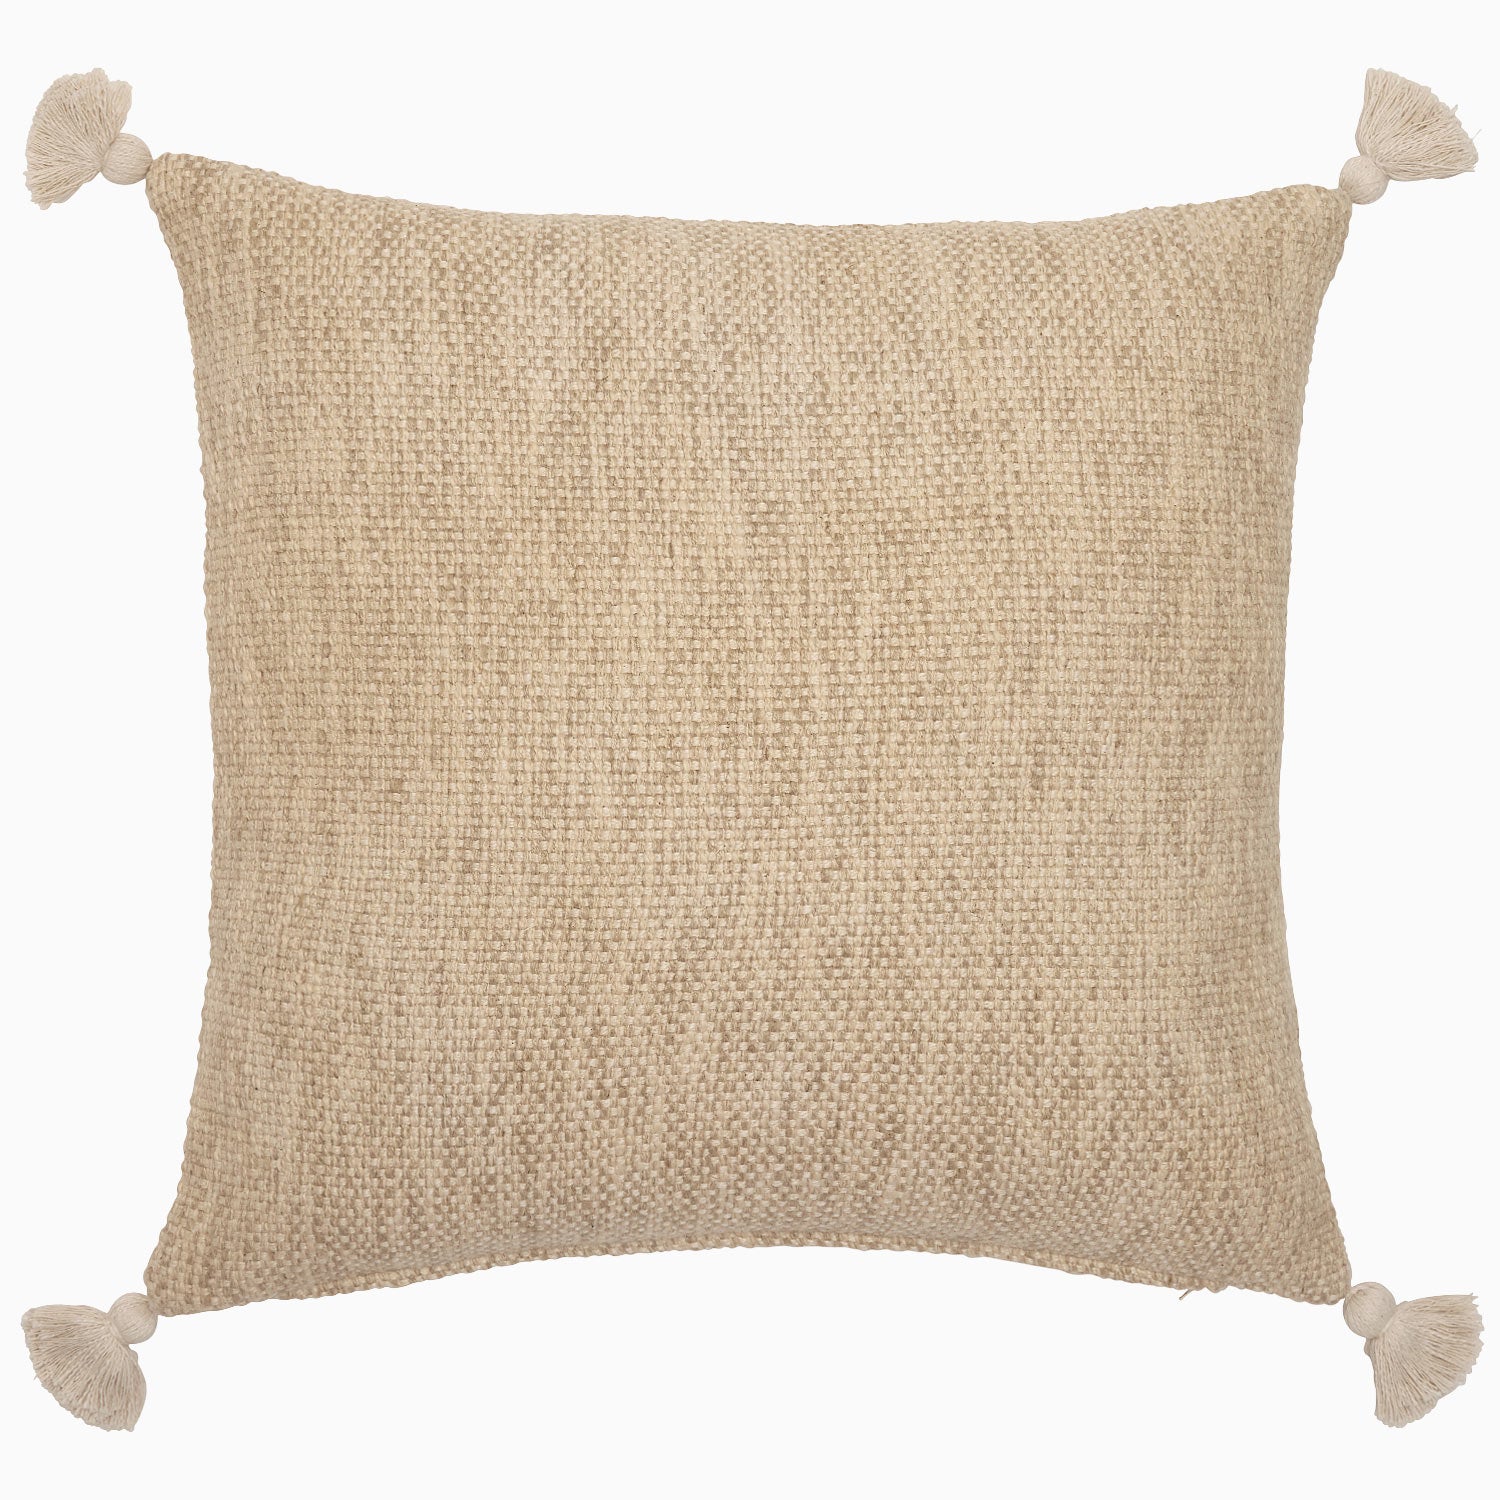 John Robshaw Woven Sand Decorative Pillow